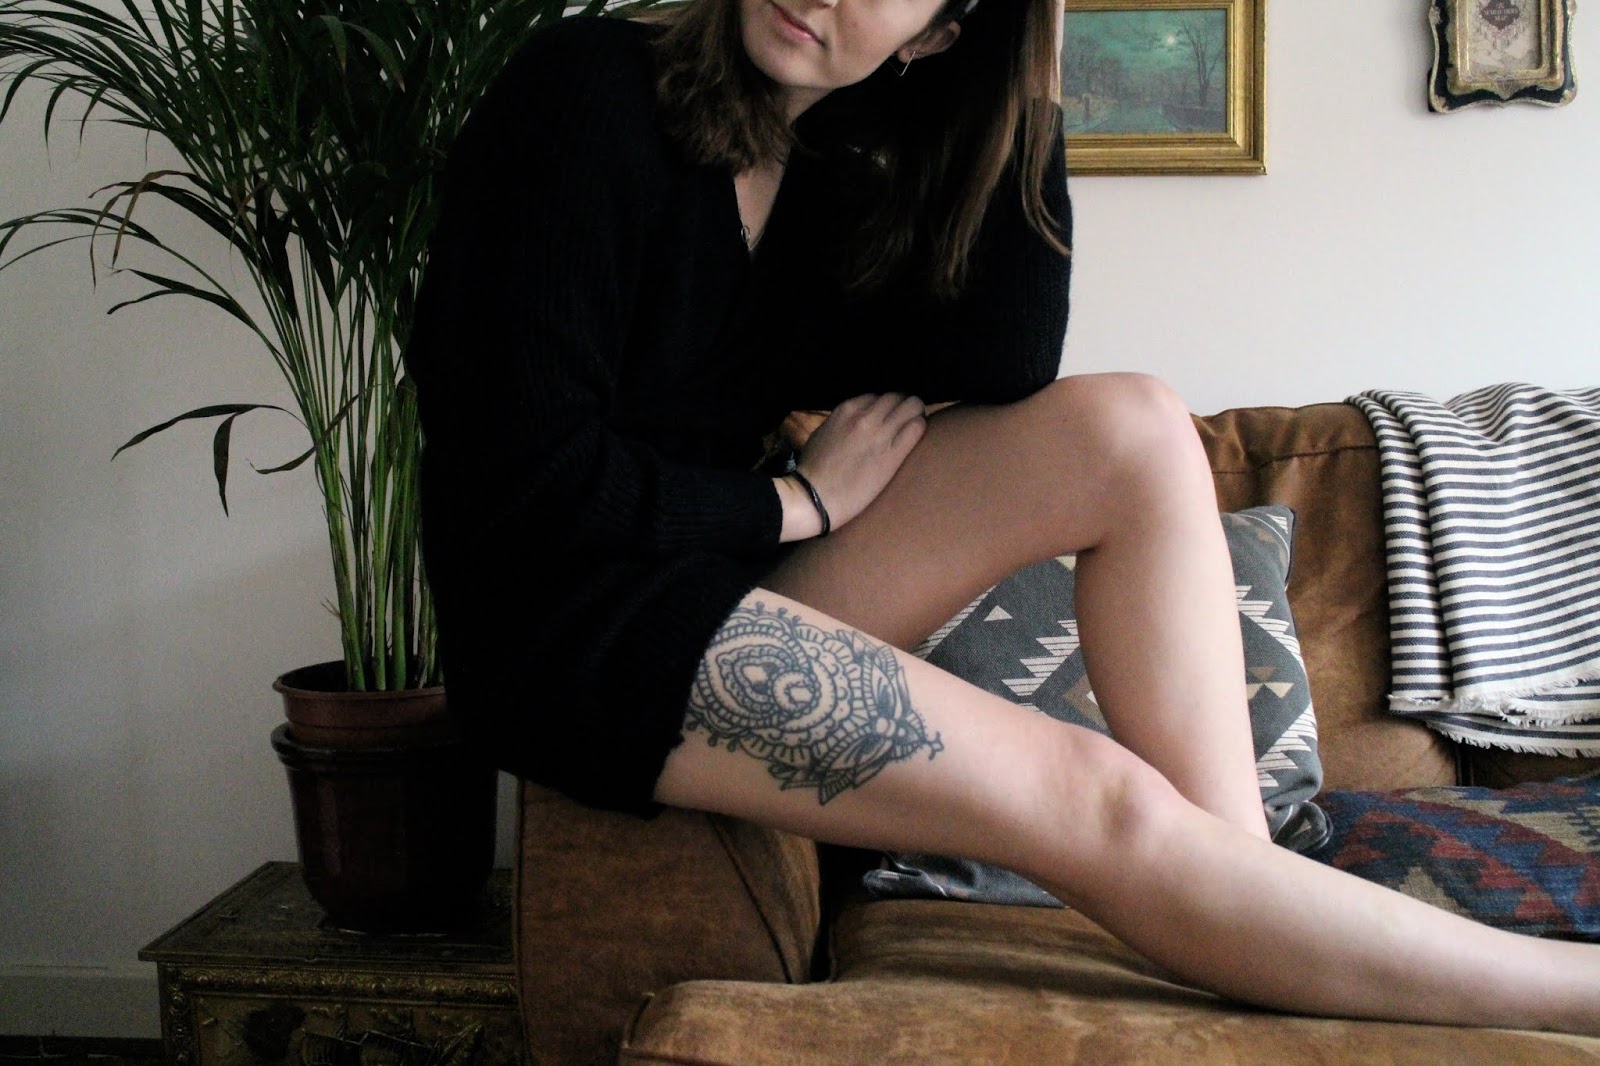 Girl in black dress with leg tattoo, sitting on edge of sofa